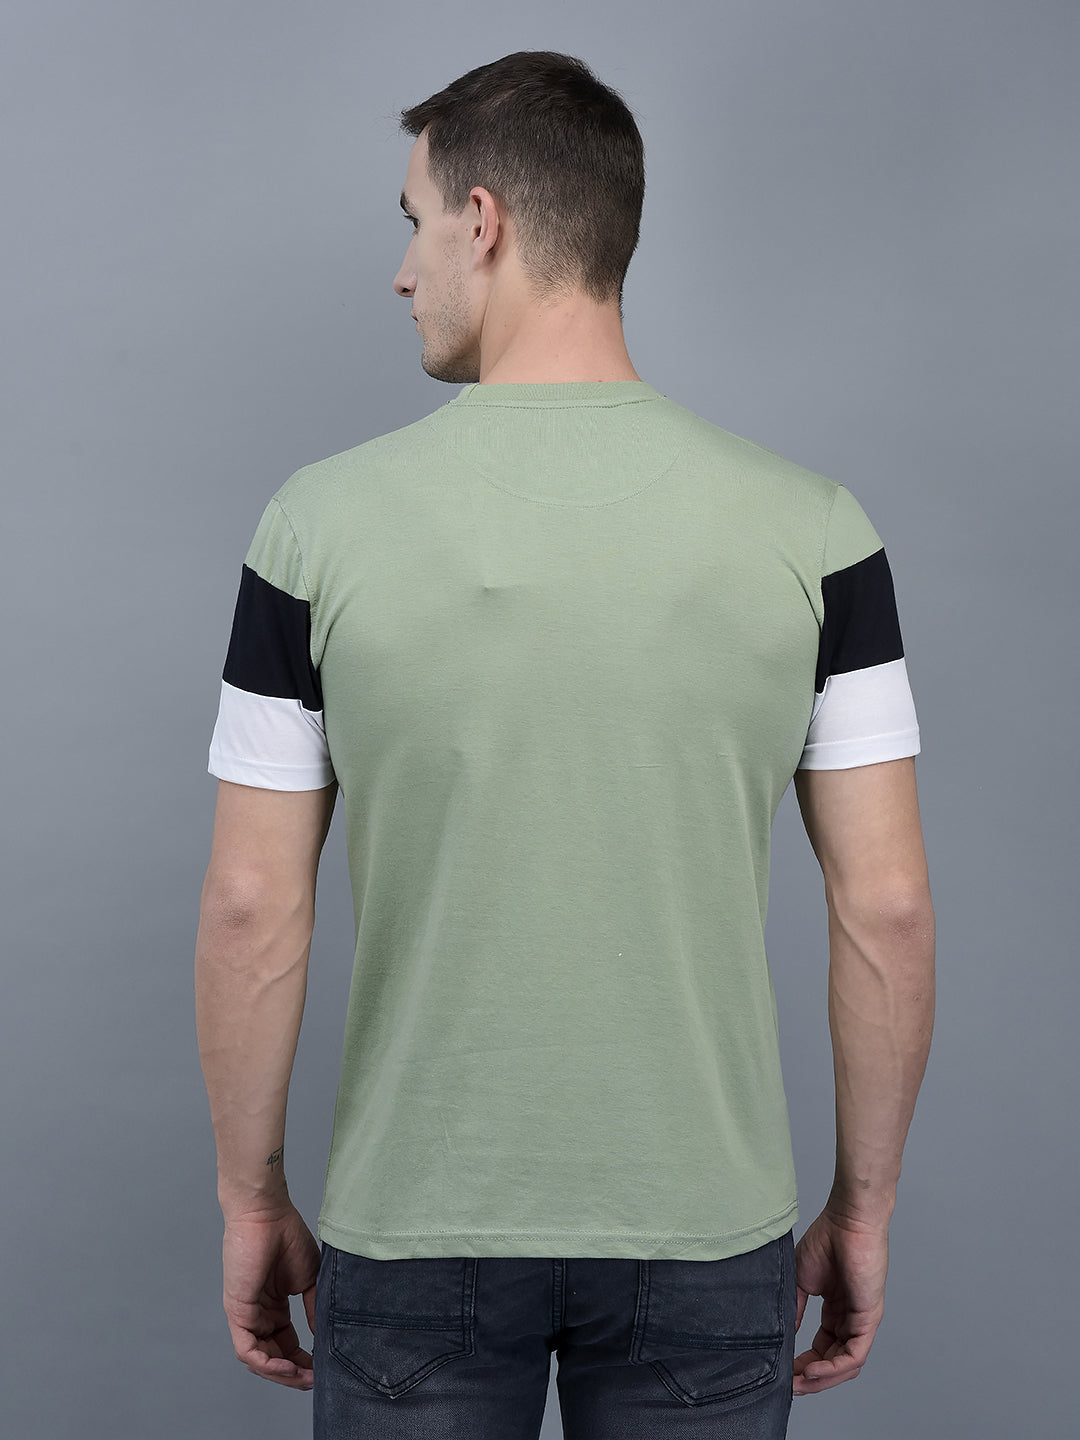 Cobb Green Striped Round Neck T-Shirt